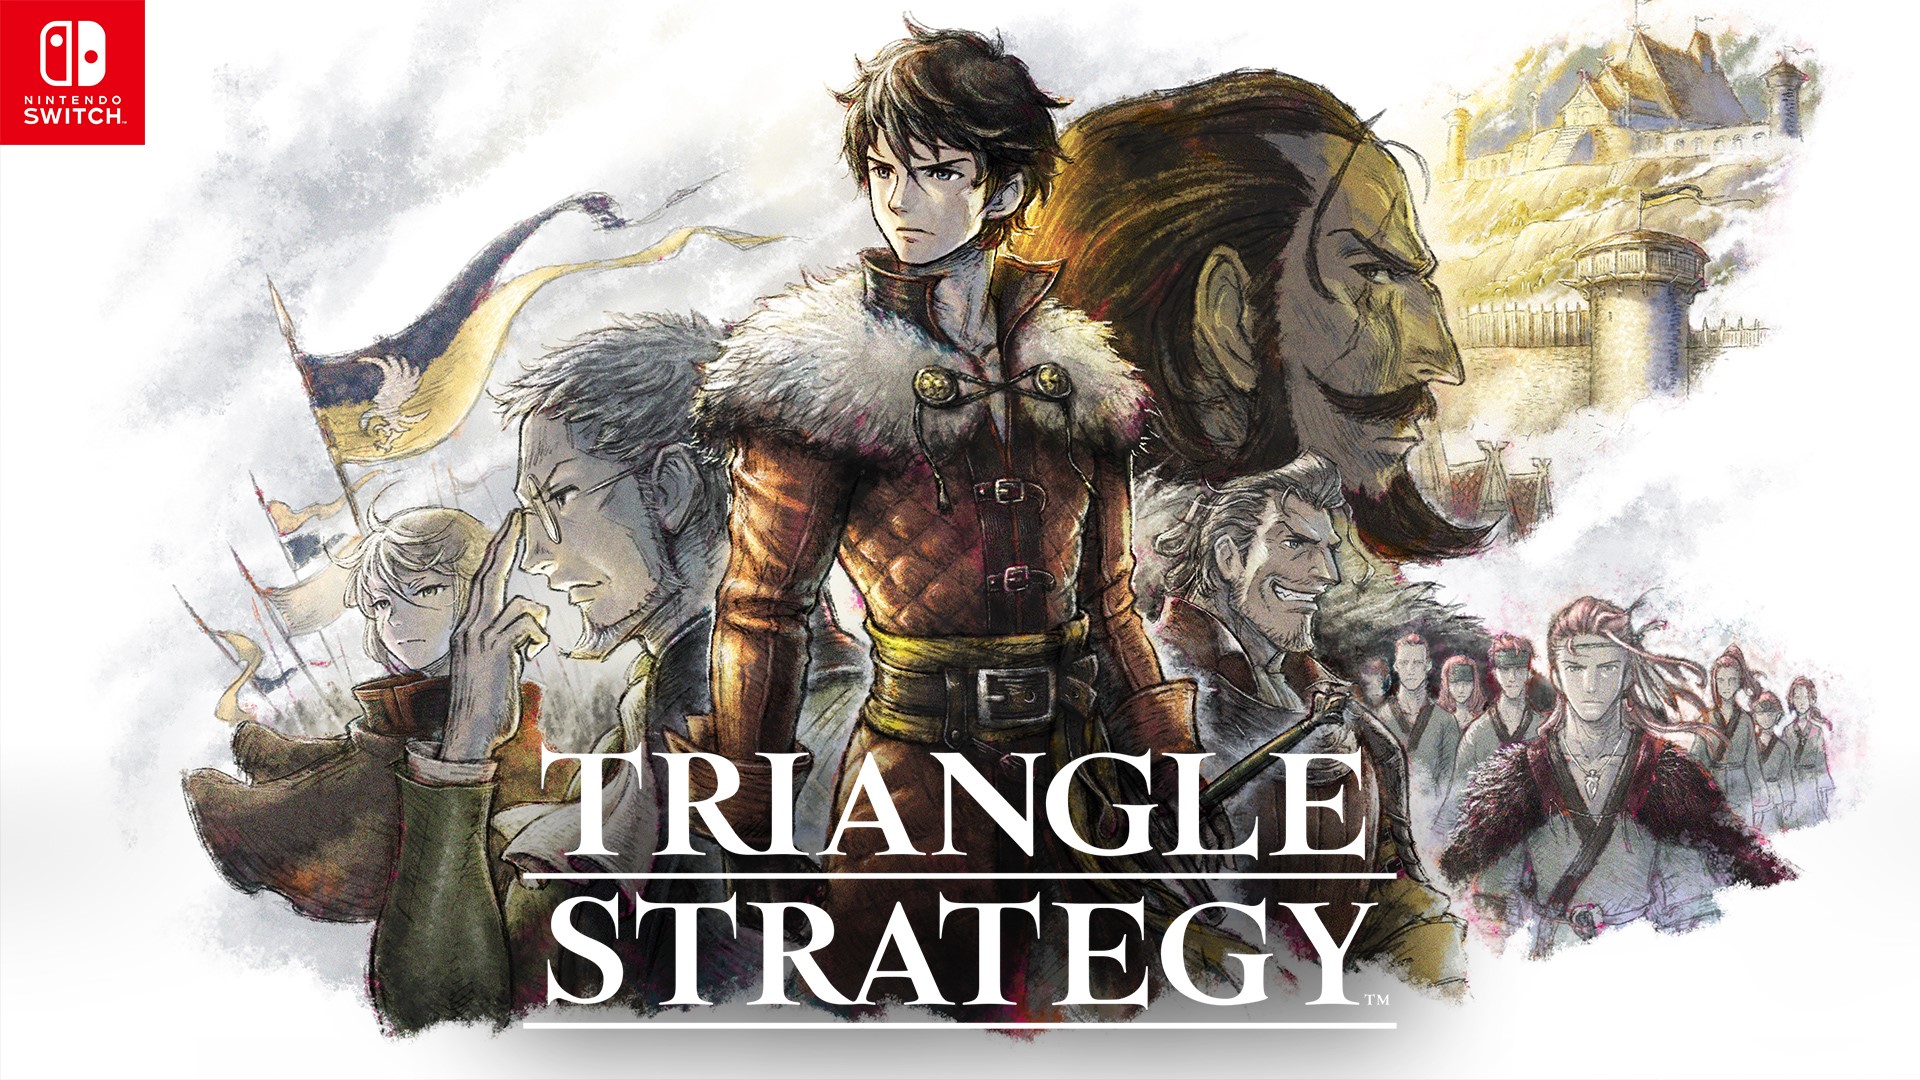 Triangle strategy artist